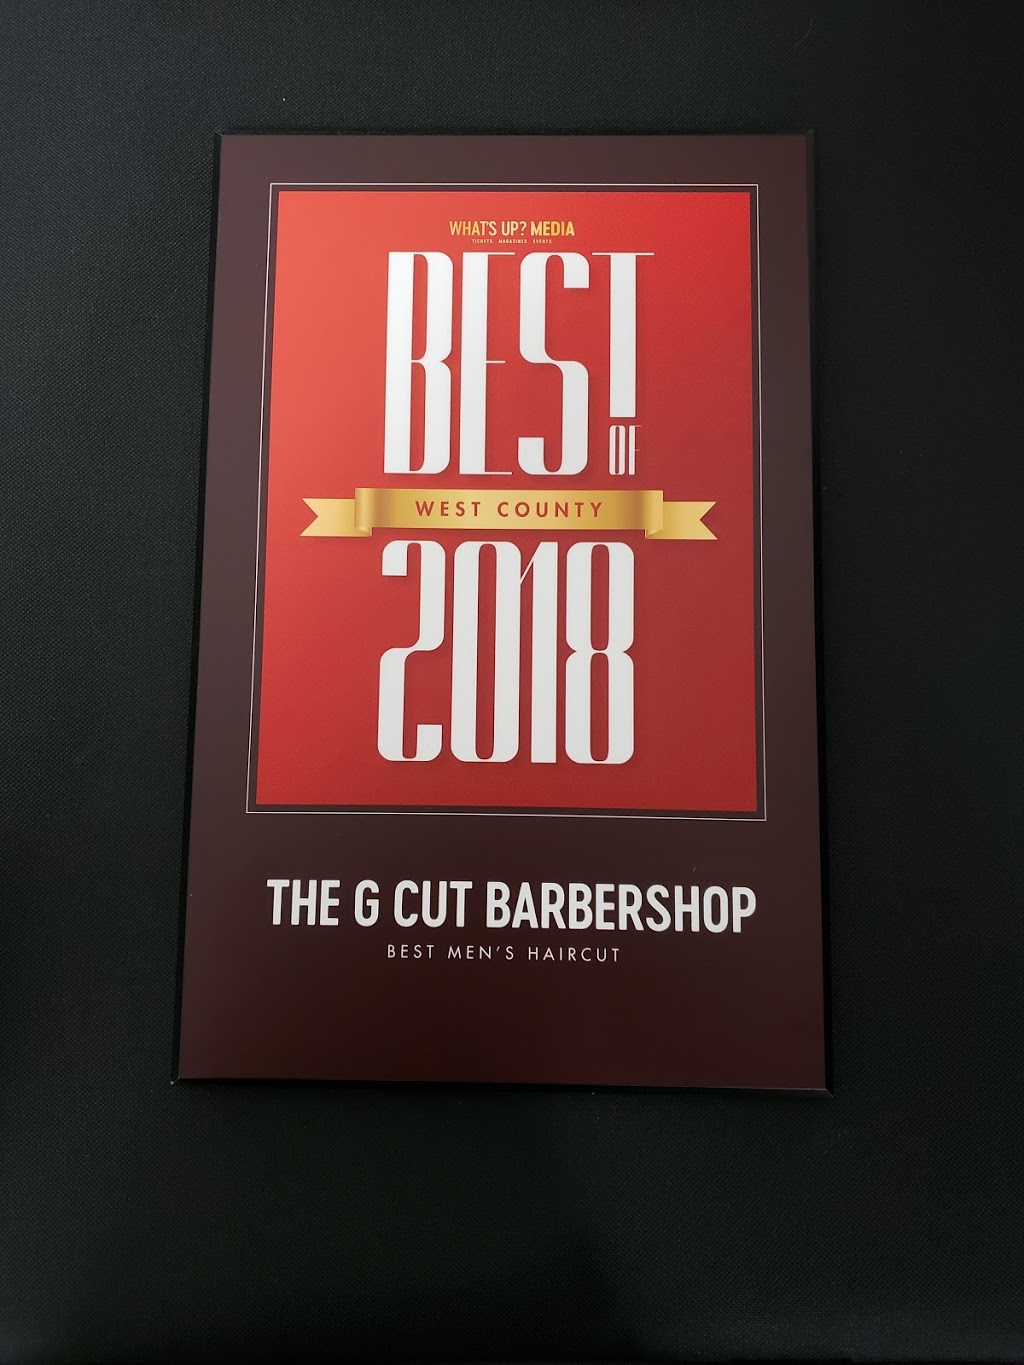 The G Cut Barbershop | 1631-A Crofton Center, Crofton, MD 21114, USA | Phone: (410) 774-9240